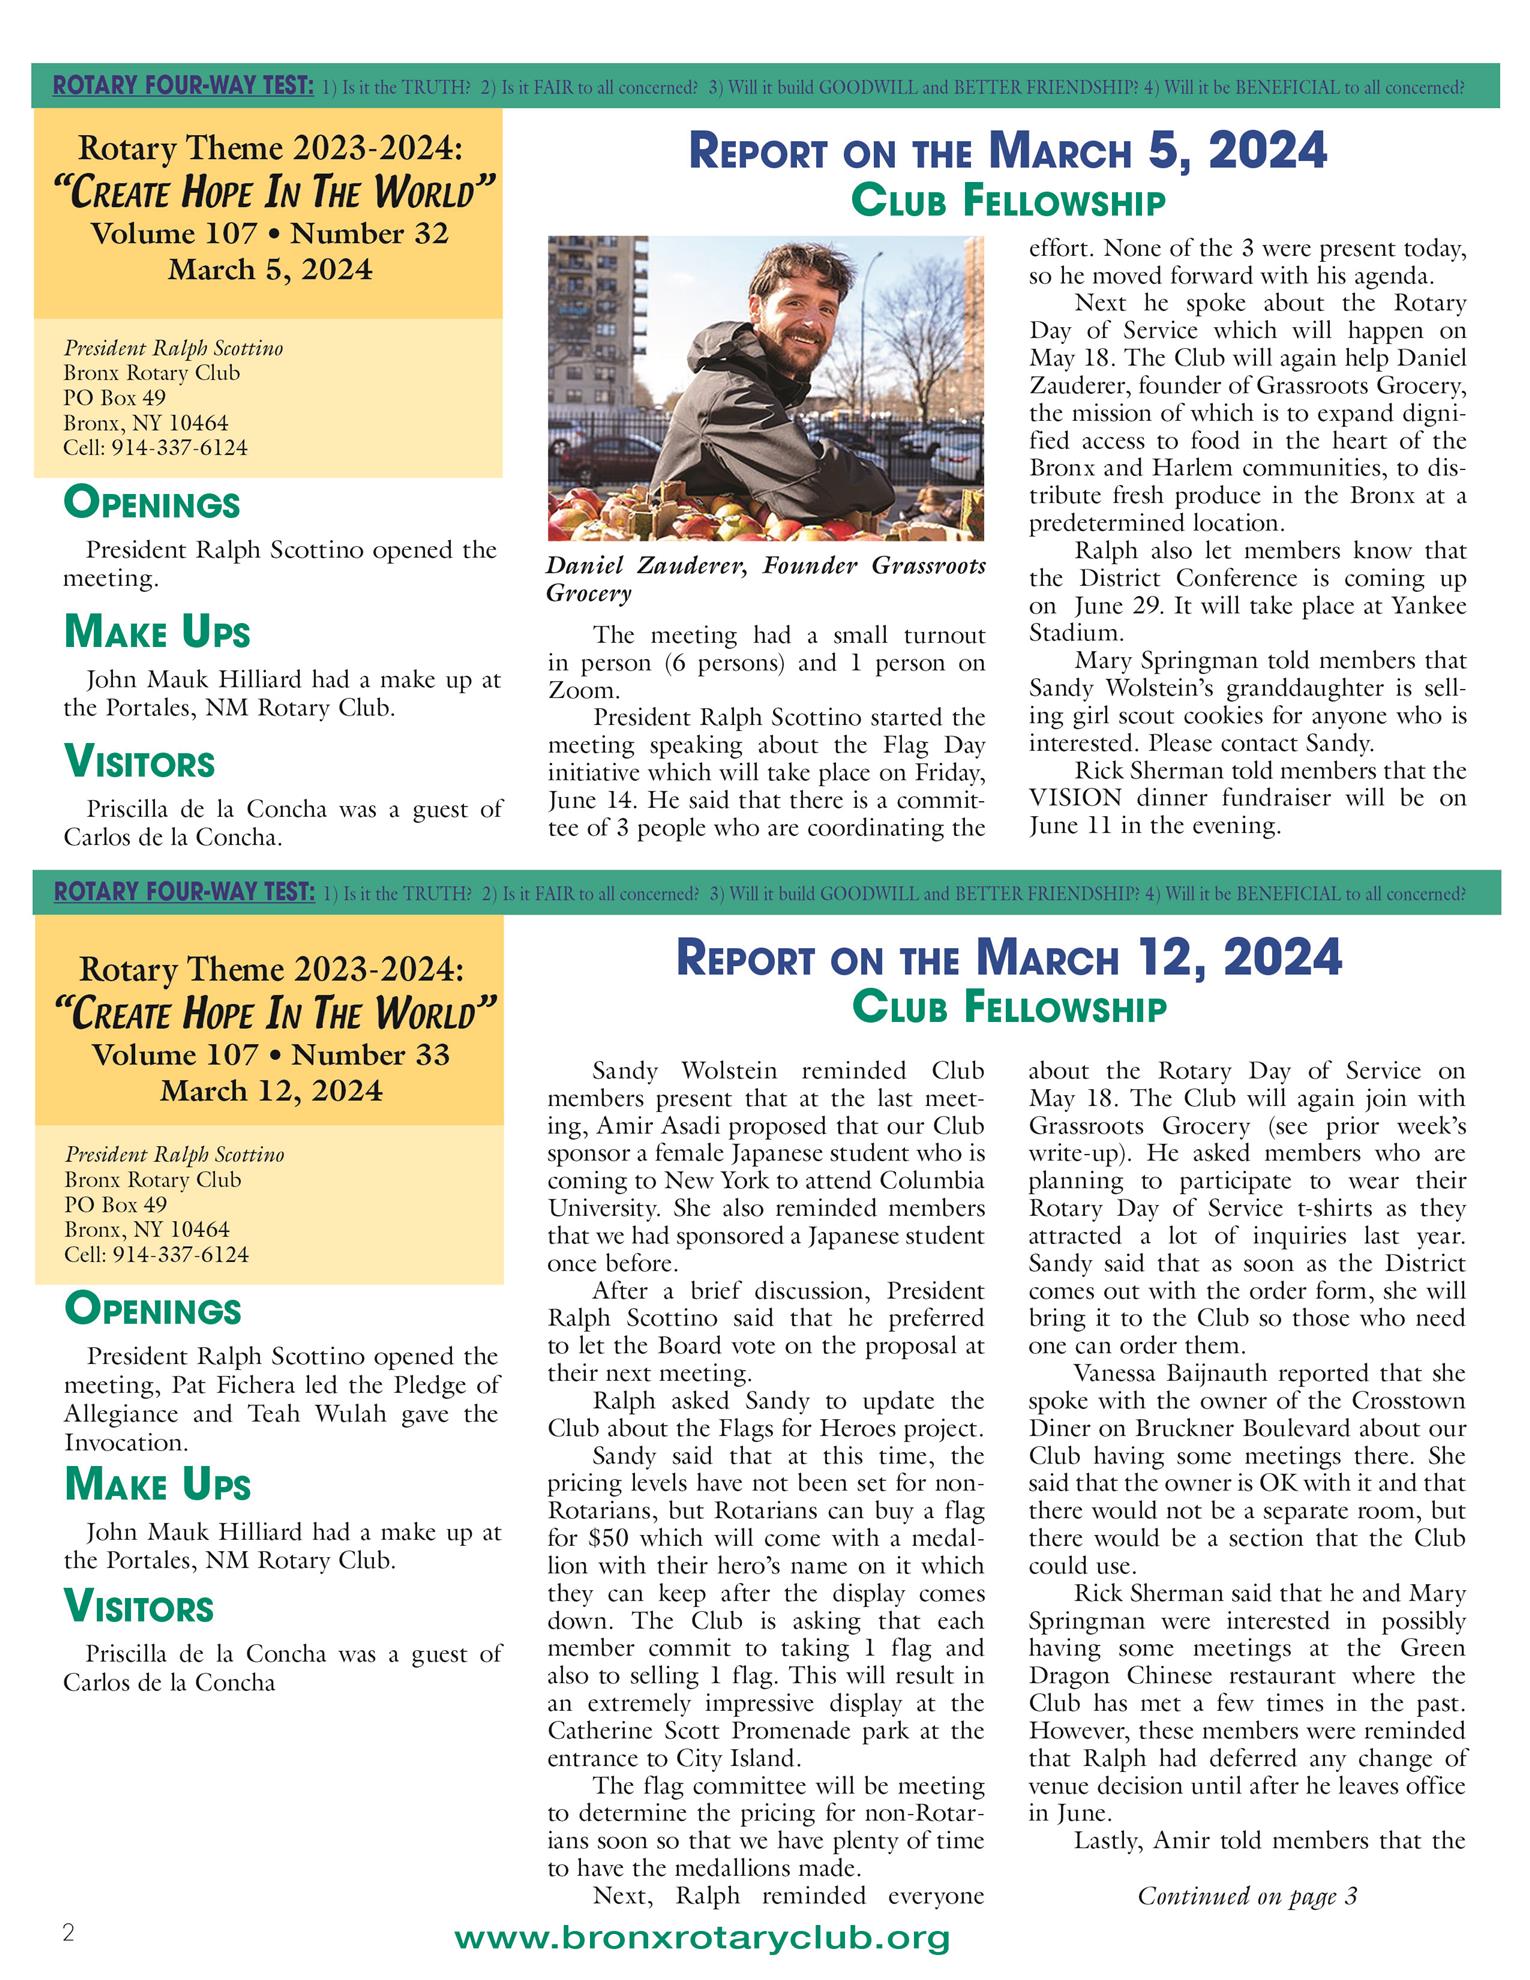 Tuesdays newsletter 2/27, 3/5 & 3/12/2024 p2